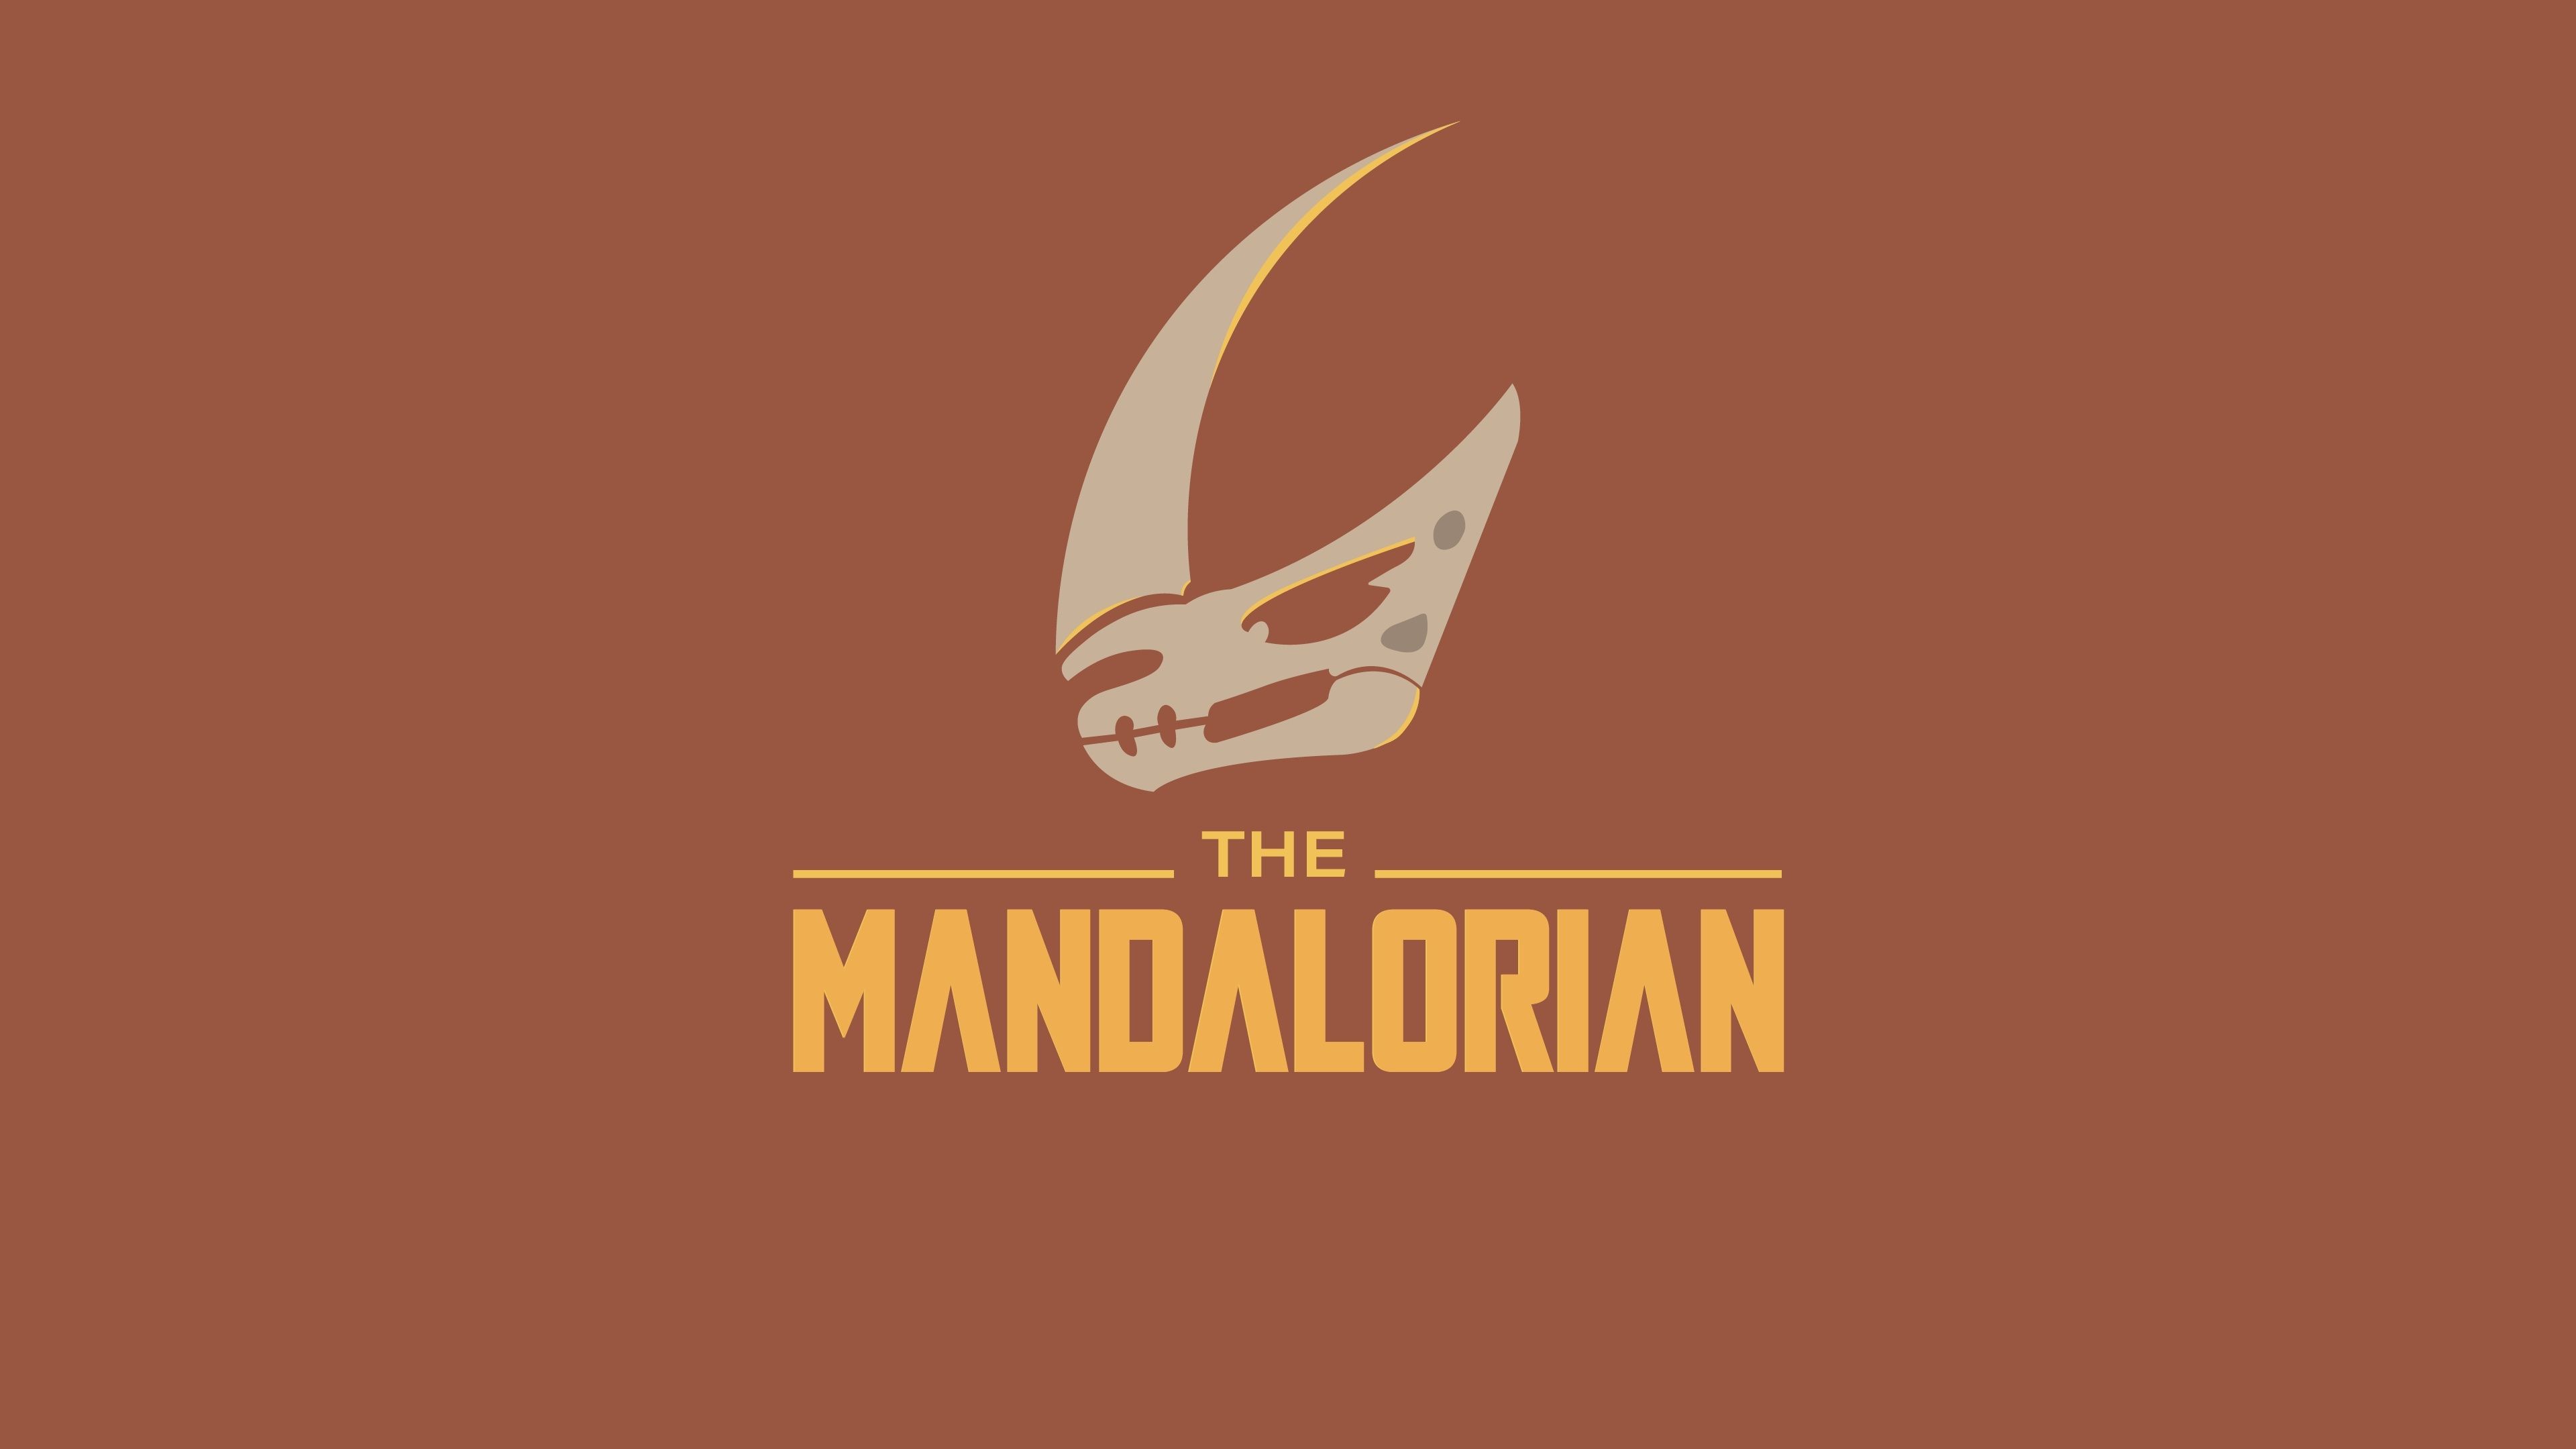 The Mandalorian Minimal Logo Wallpaper, HD Minimalist 4K Wallpaper, Image, Photo and Background